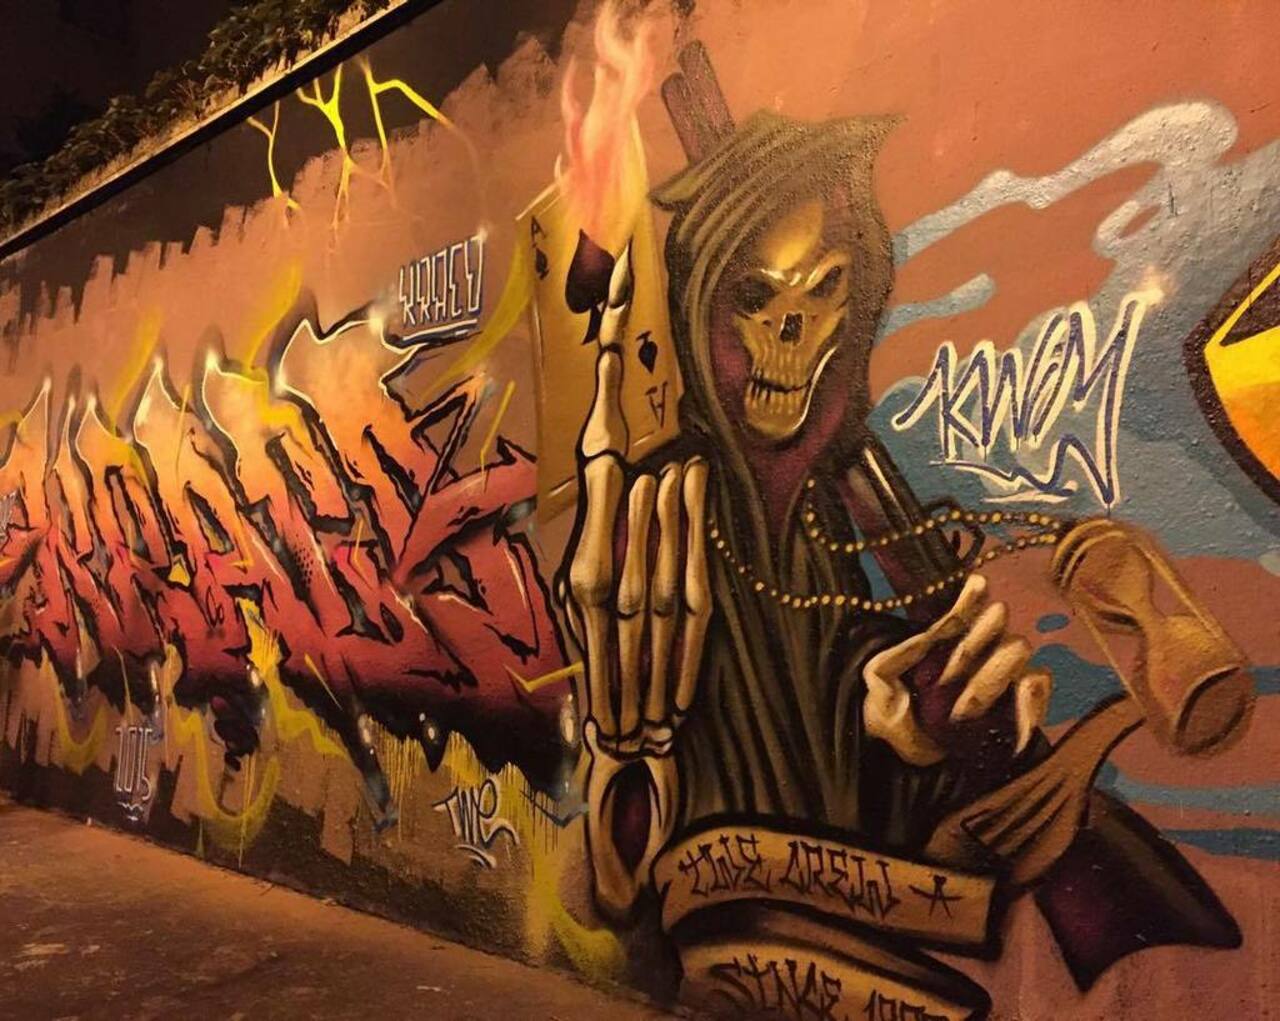 RT @StArtEverywhere: Du côté de Paris #streetartparis #parisstreetart #wallart #art #streetart #graffiti by wouye http://t.co/SDocii09R2